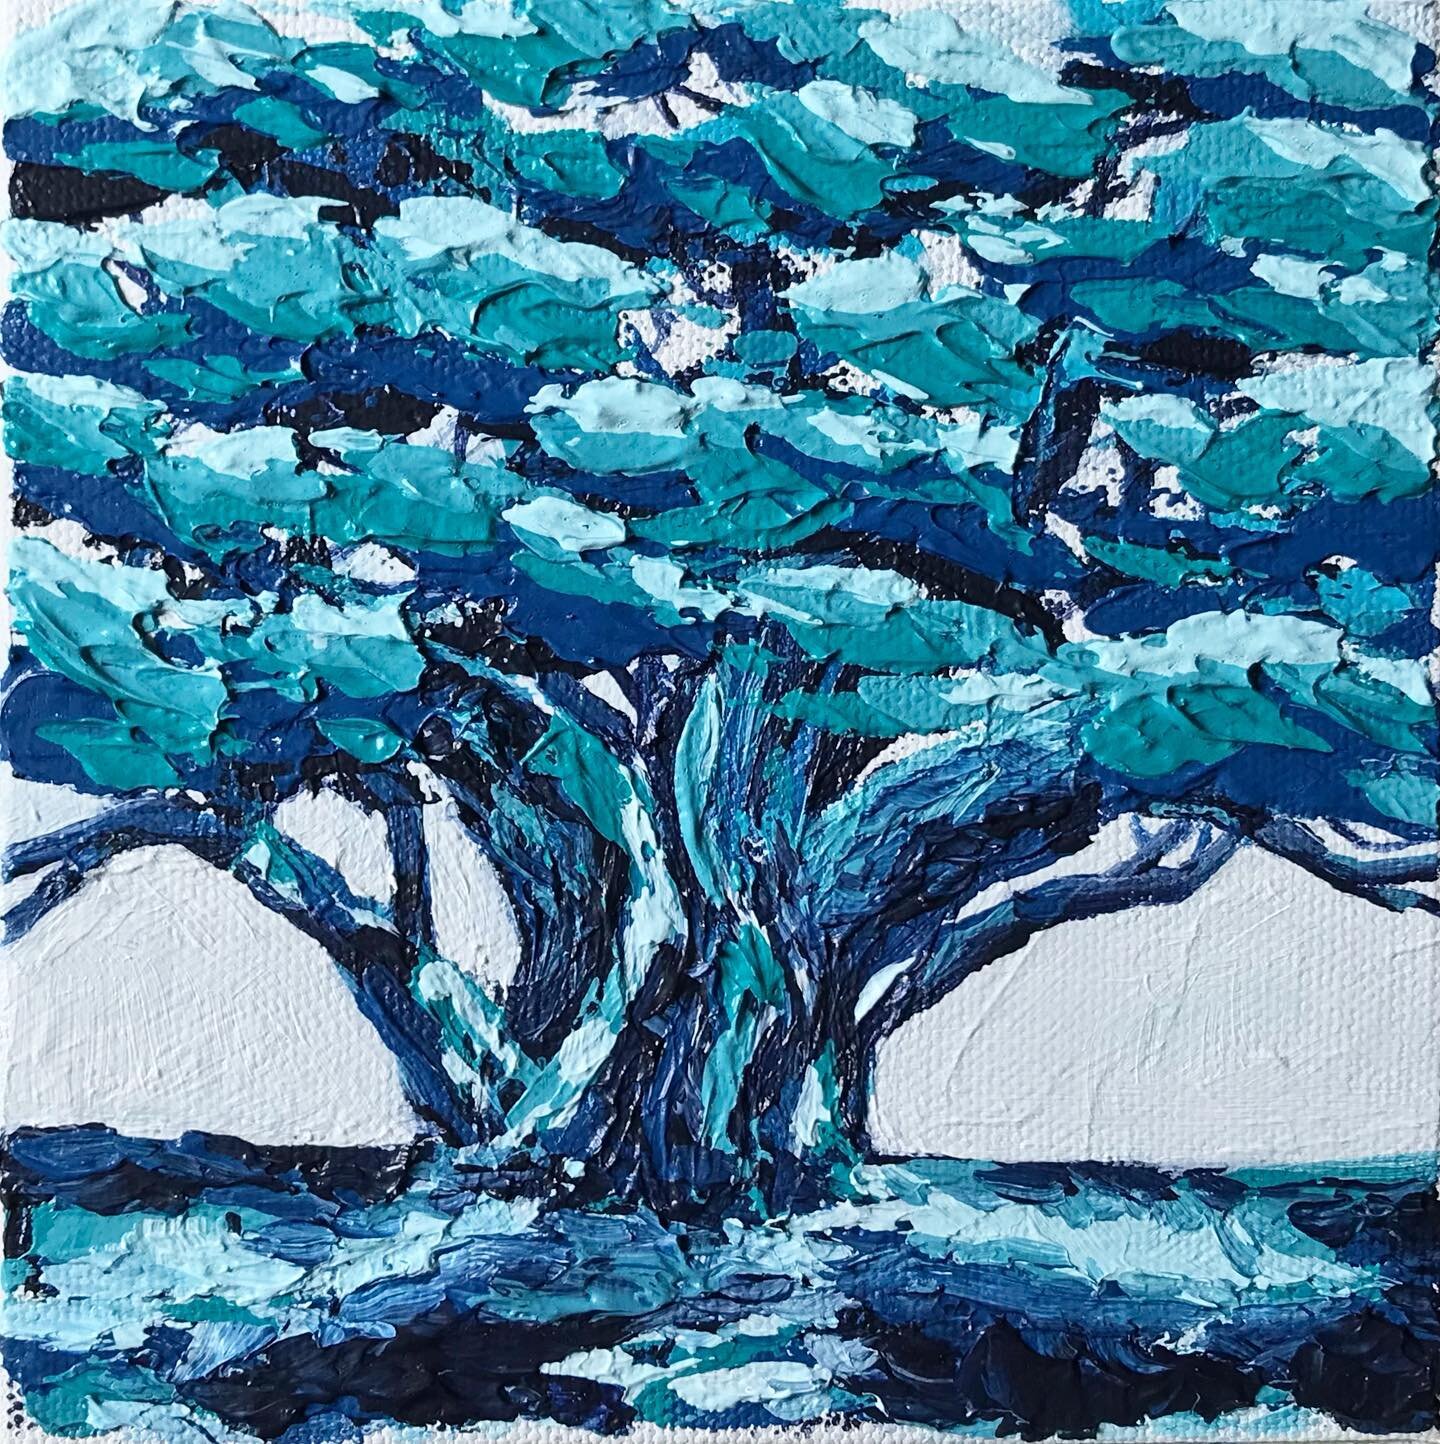 finished mini canvas 6x6 in

#treepainting #blues #scartist #minicanvas #tree #acrylics #femaleartist #coloradotree #bluetree #acrylicpainting #chsartist